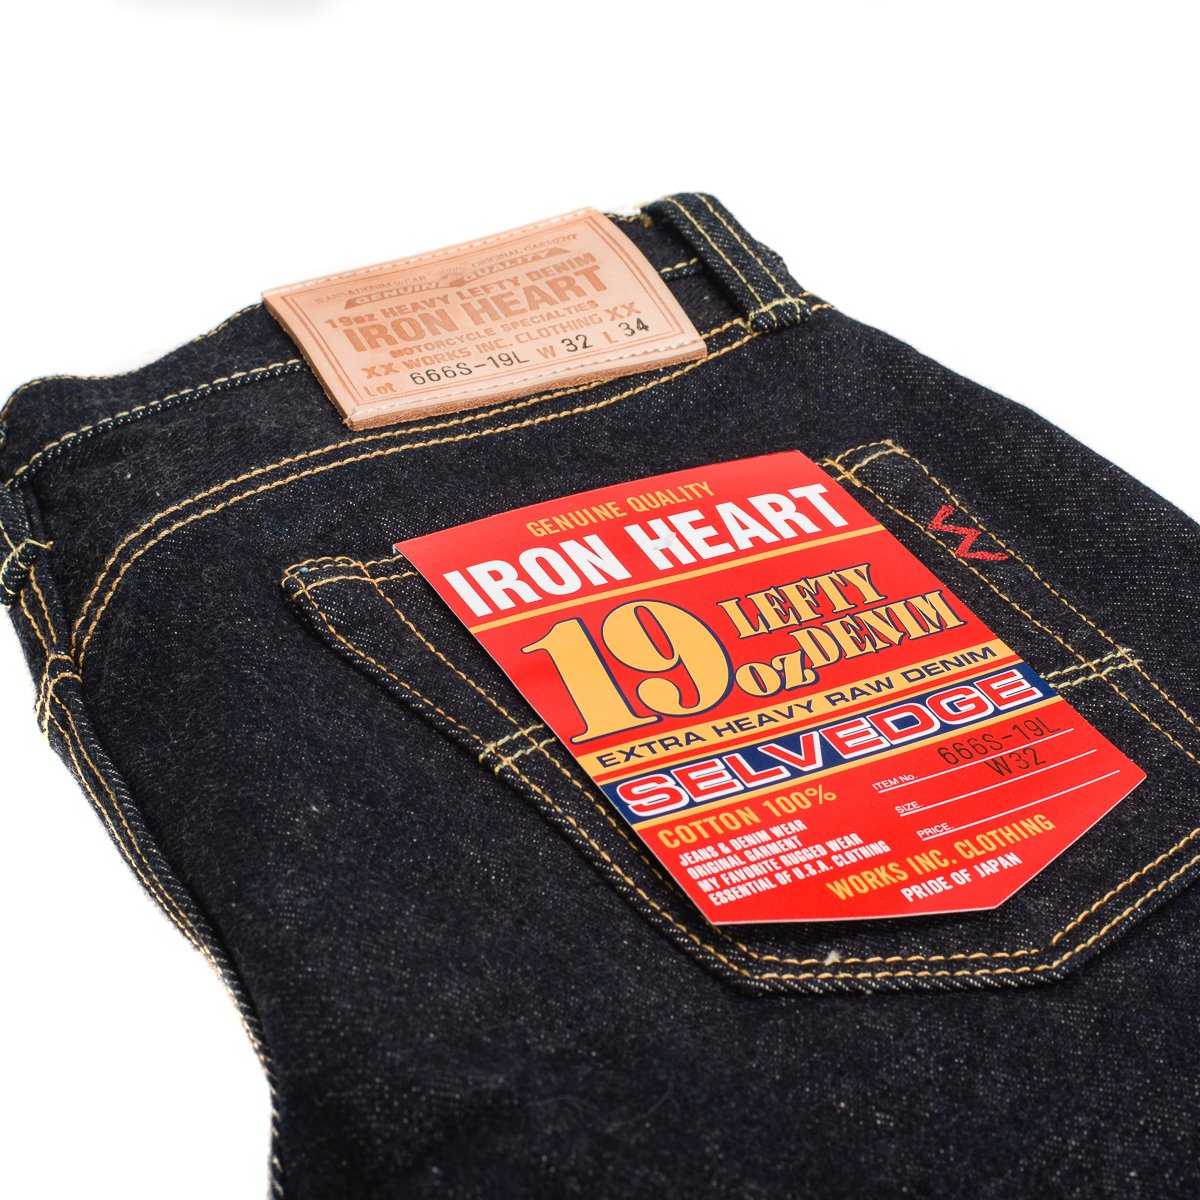 iron heart jeans price